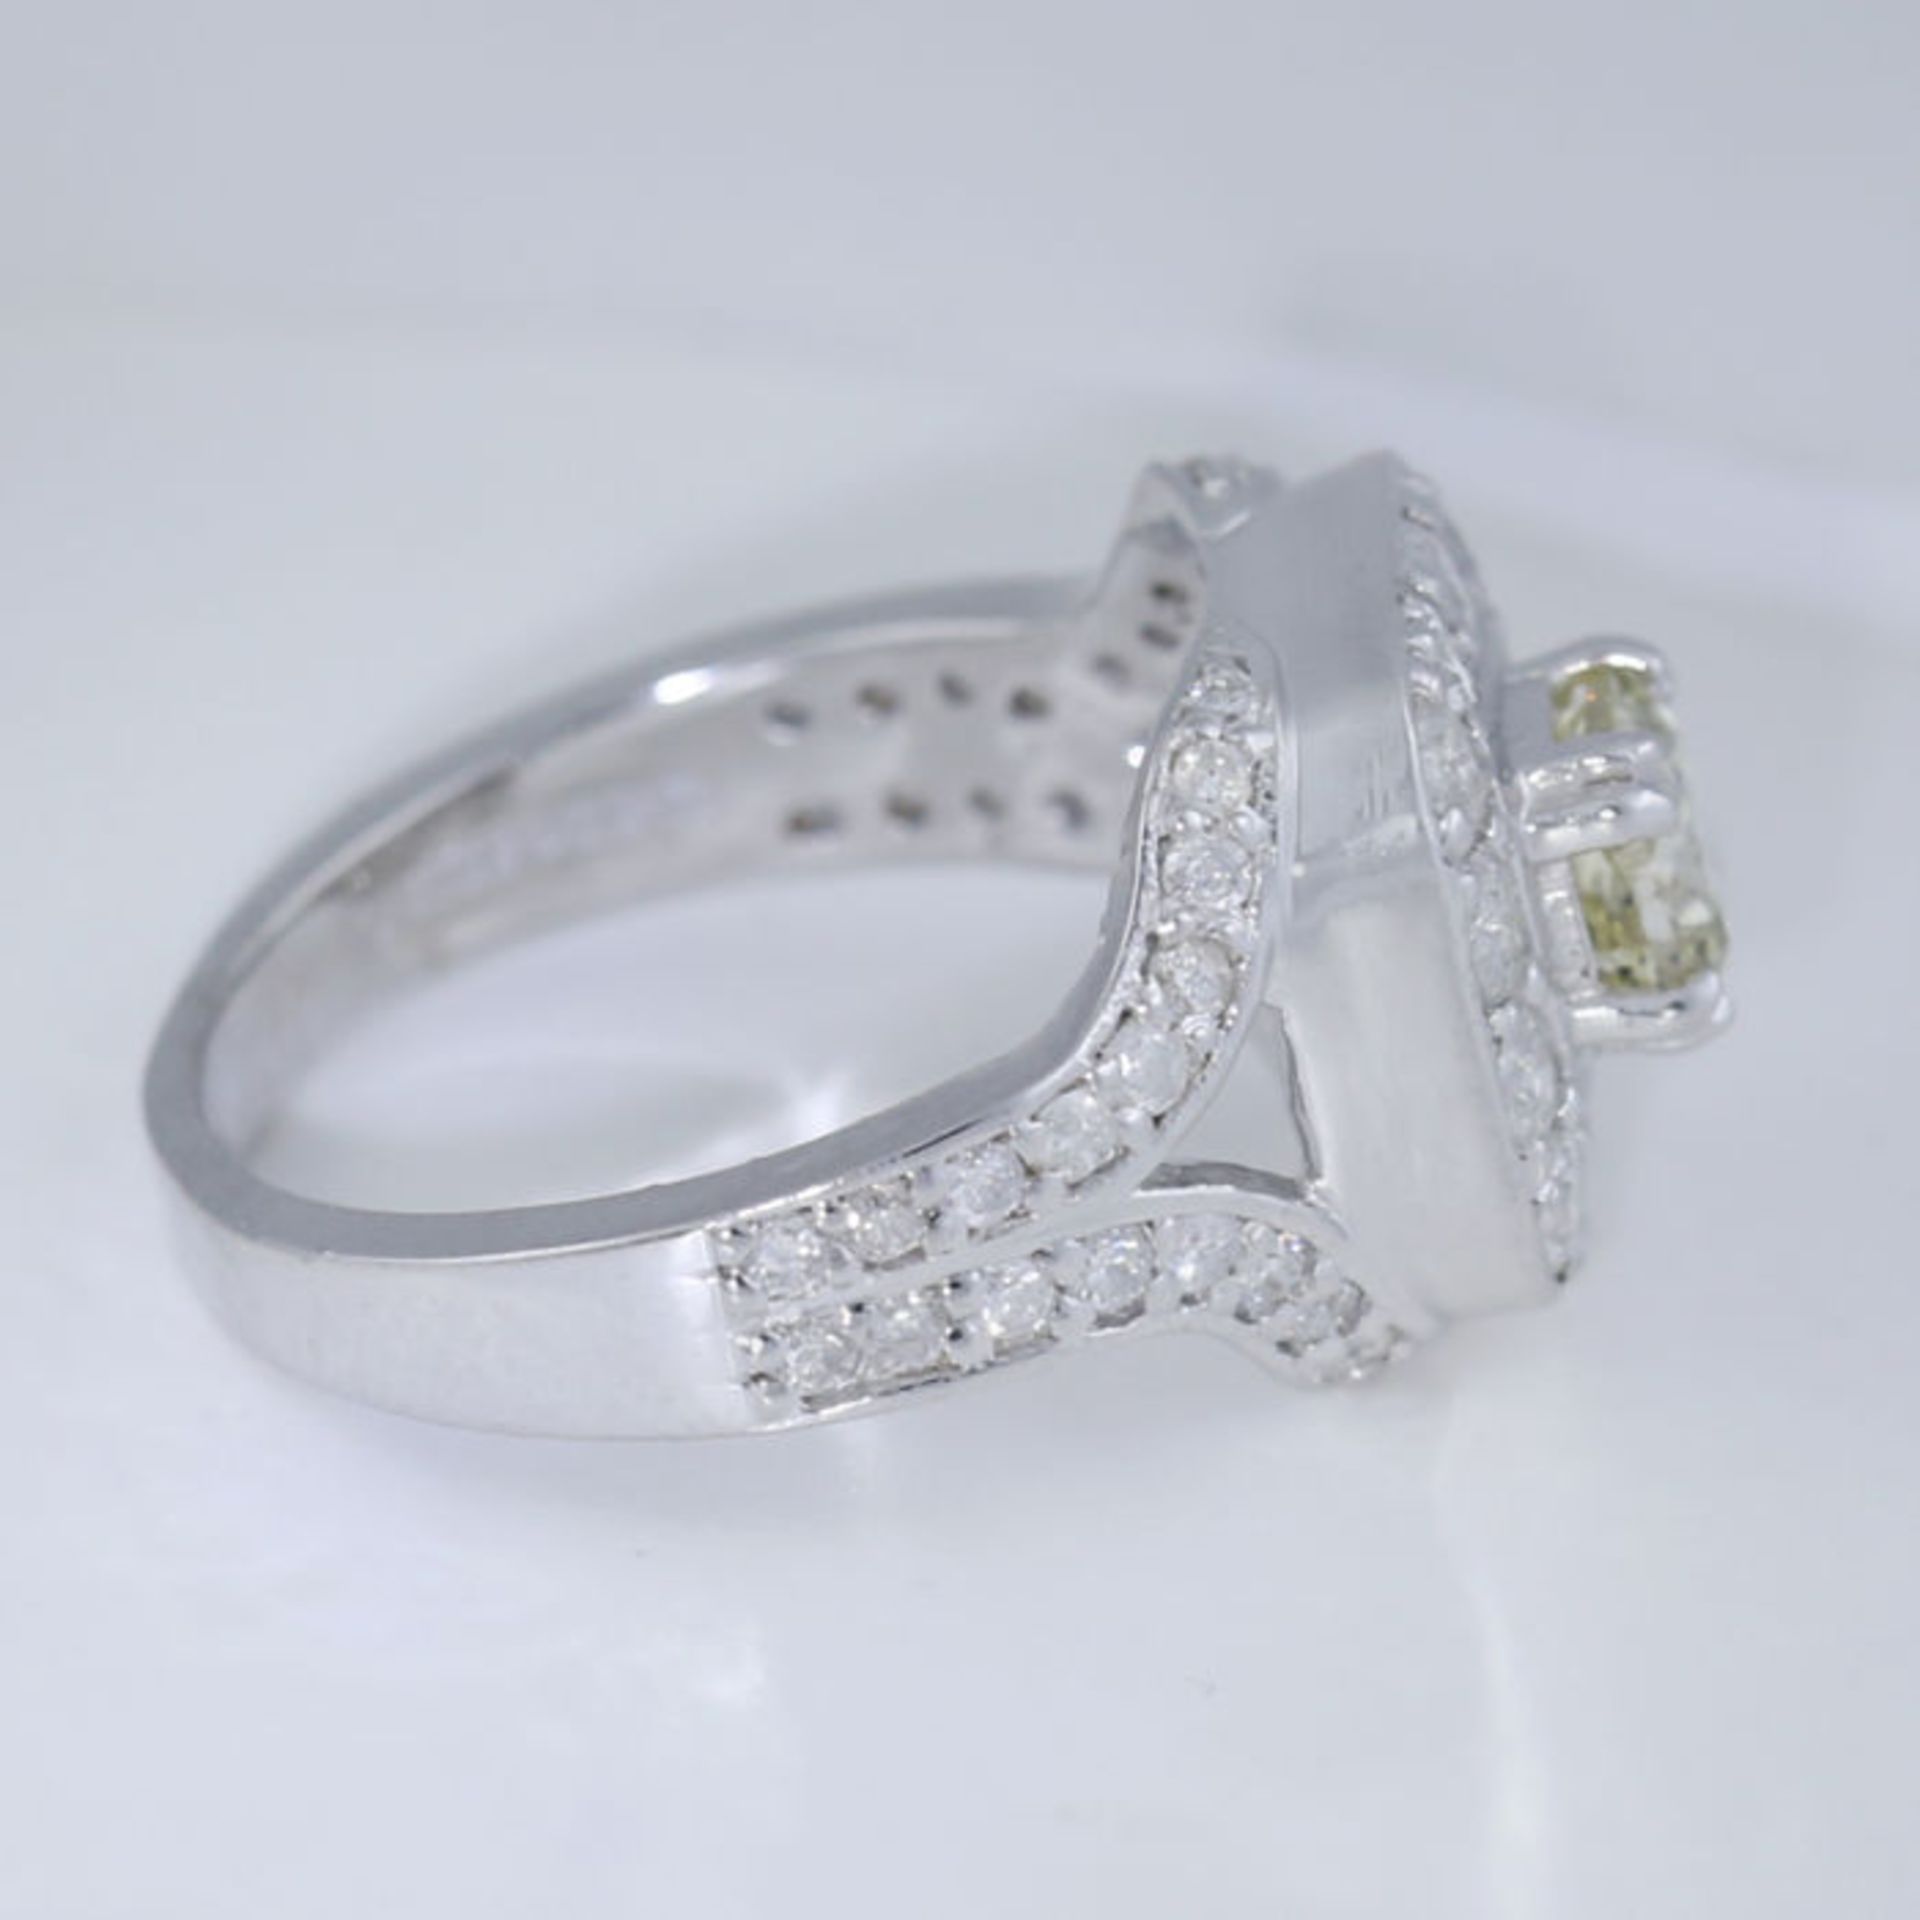 14 K / 585 White Gold Designer Solitaire Diamond (IGI Certified) Ring - Image 6 of 7